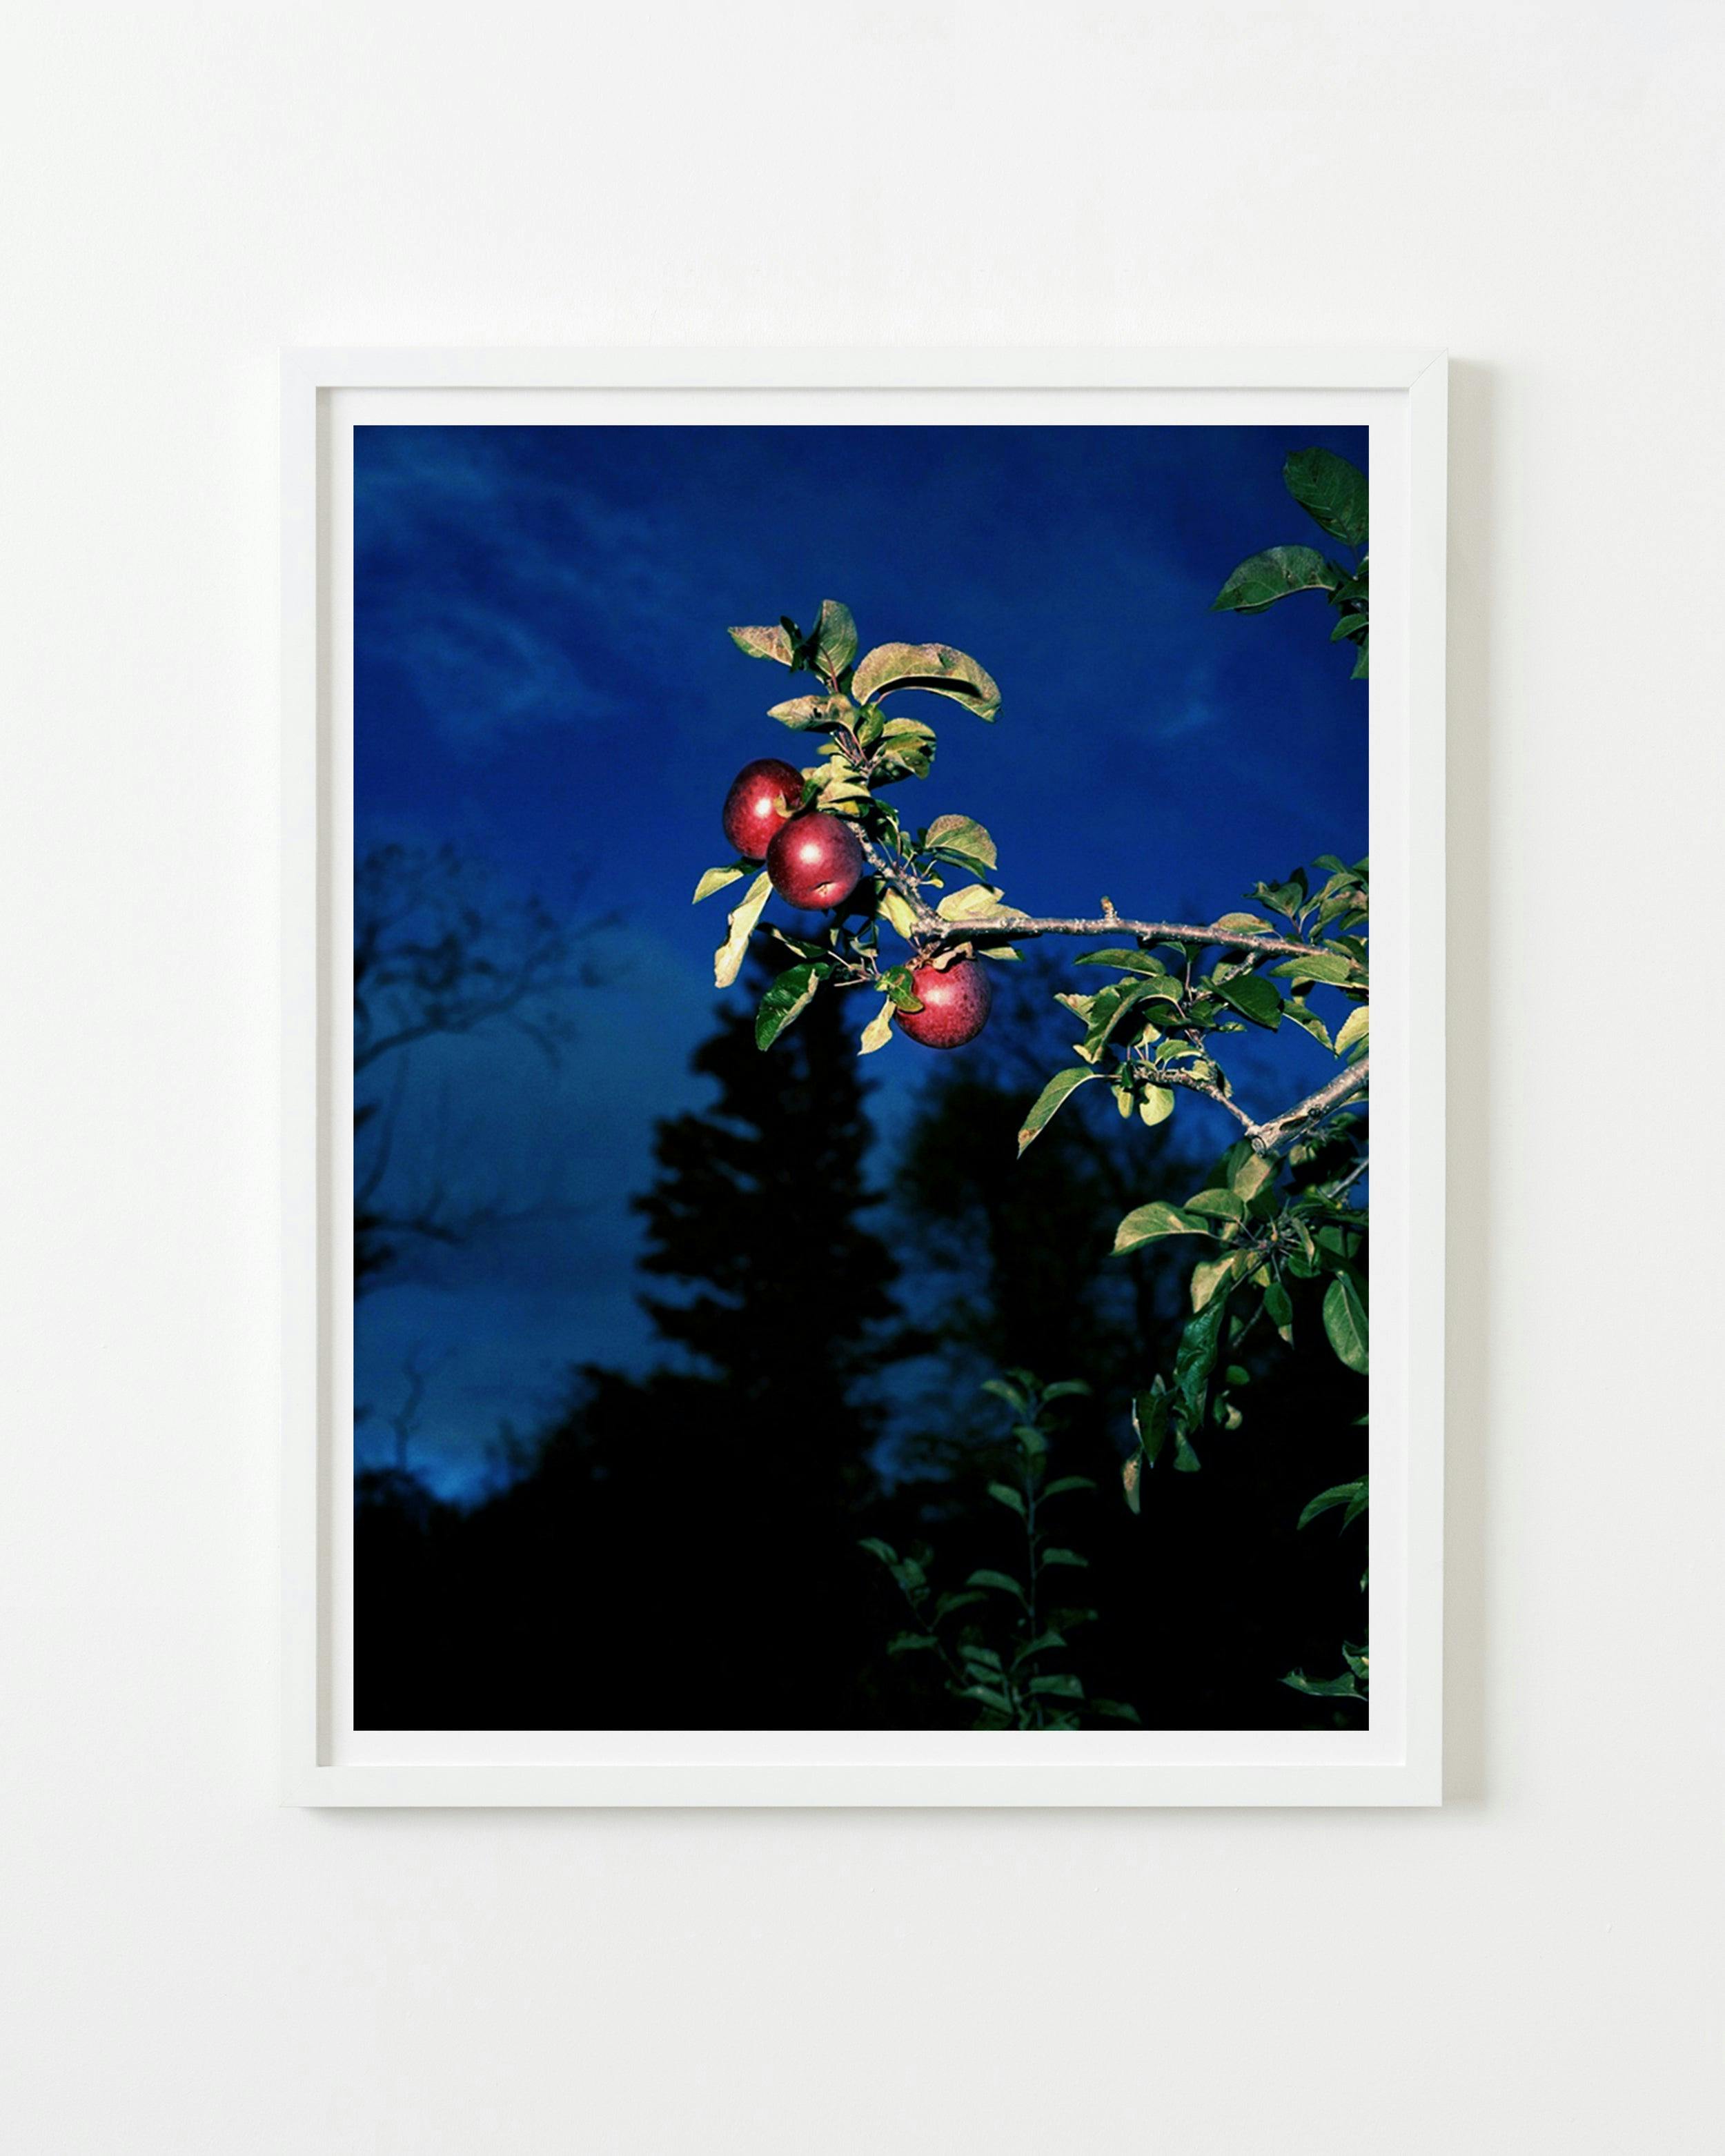 Photography by Nick Meyer titled "Apples, Burlington".